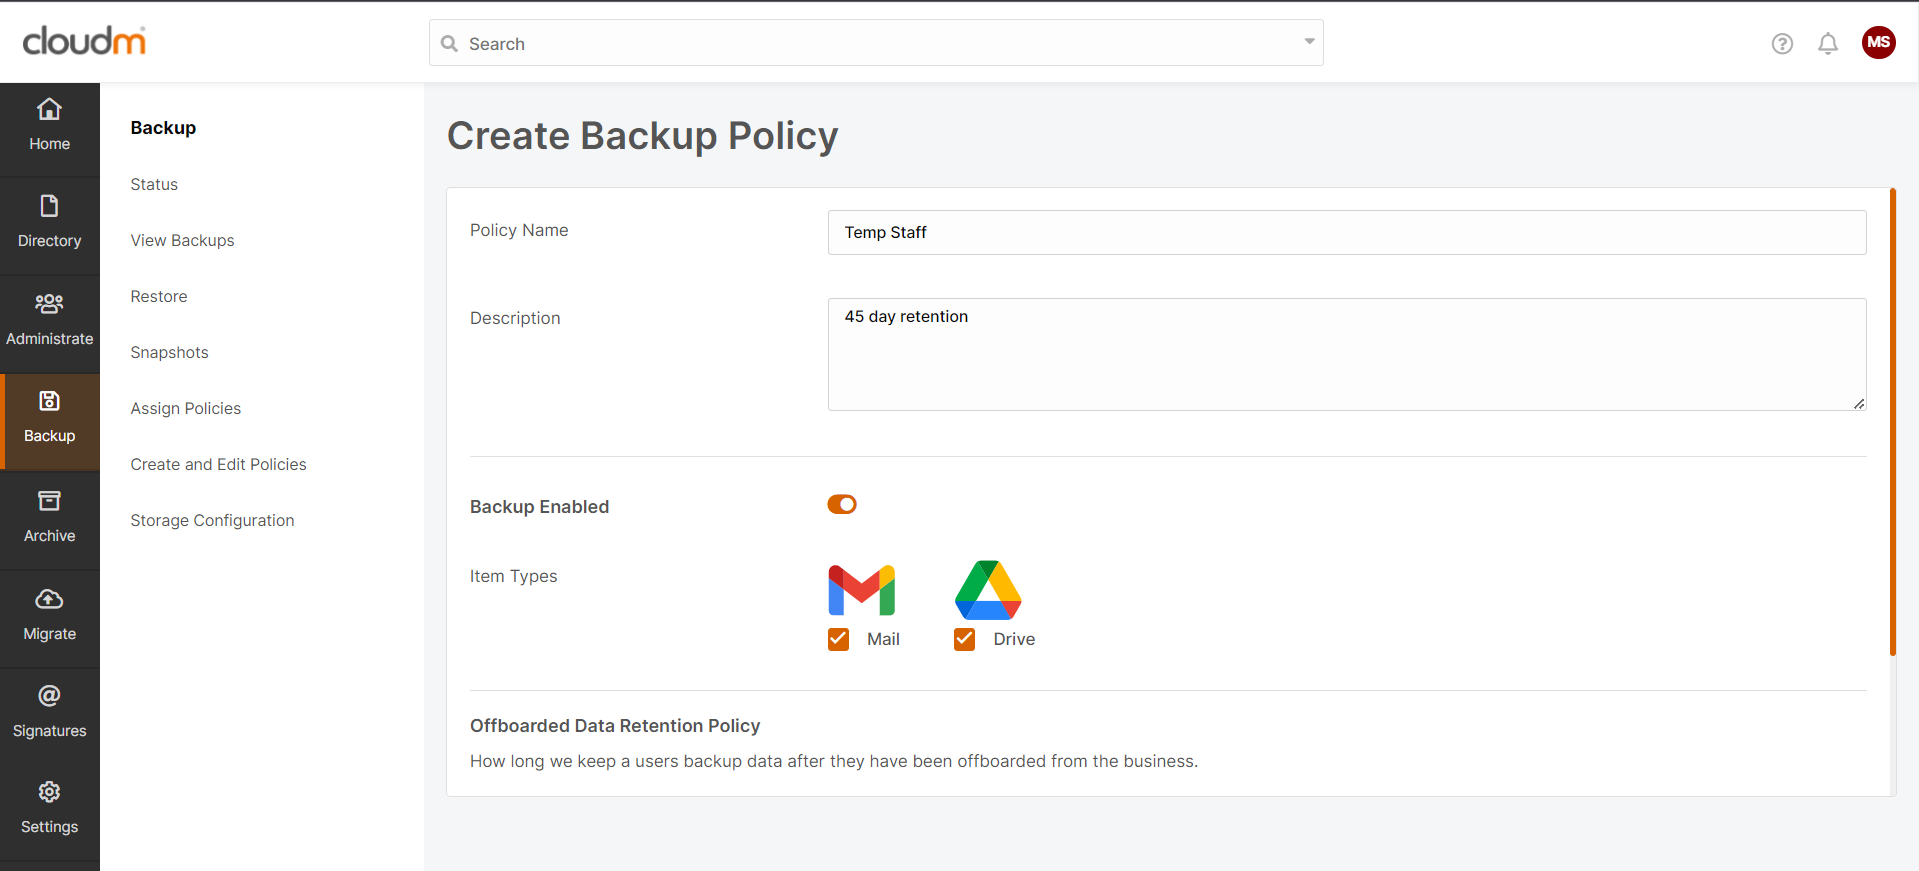 CloudM Backup backup policy creation